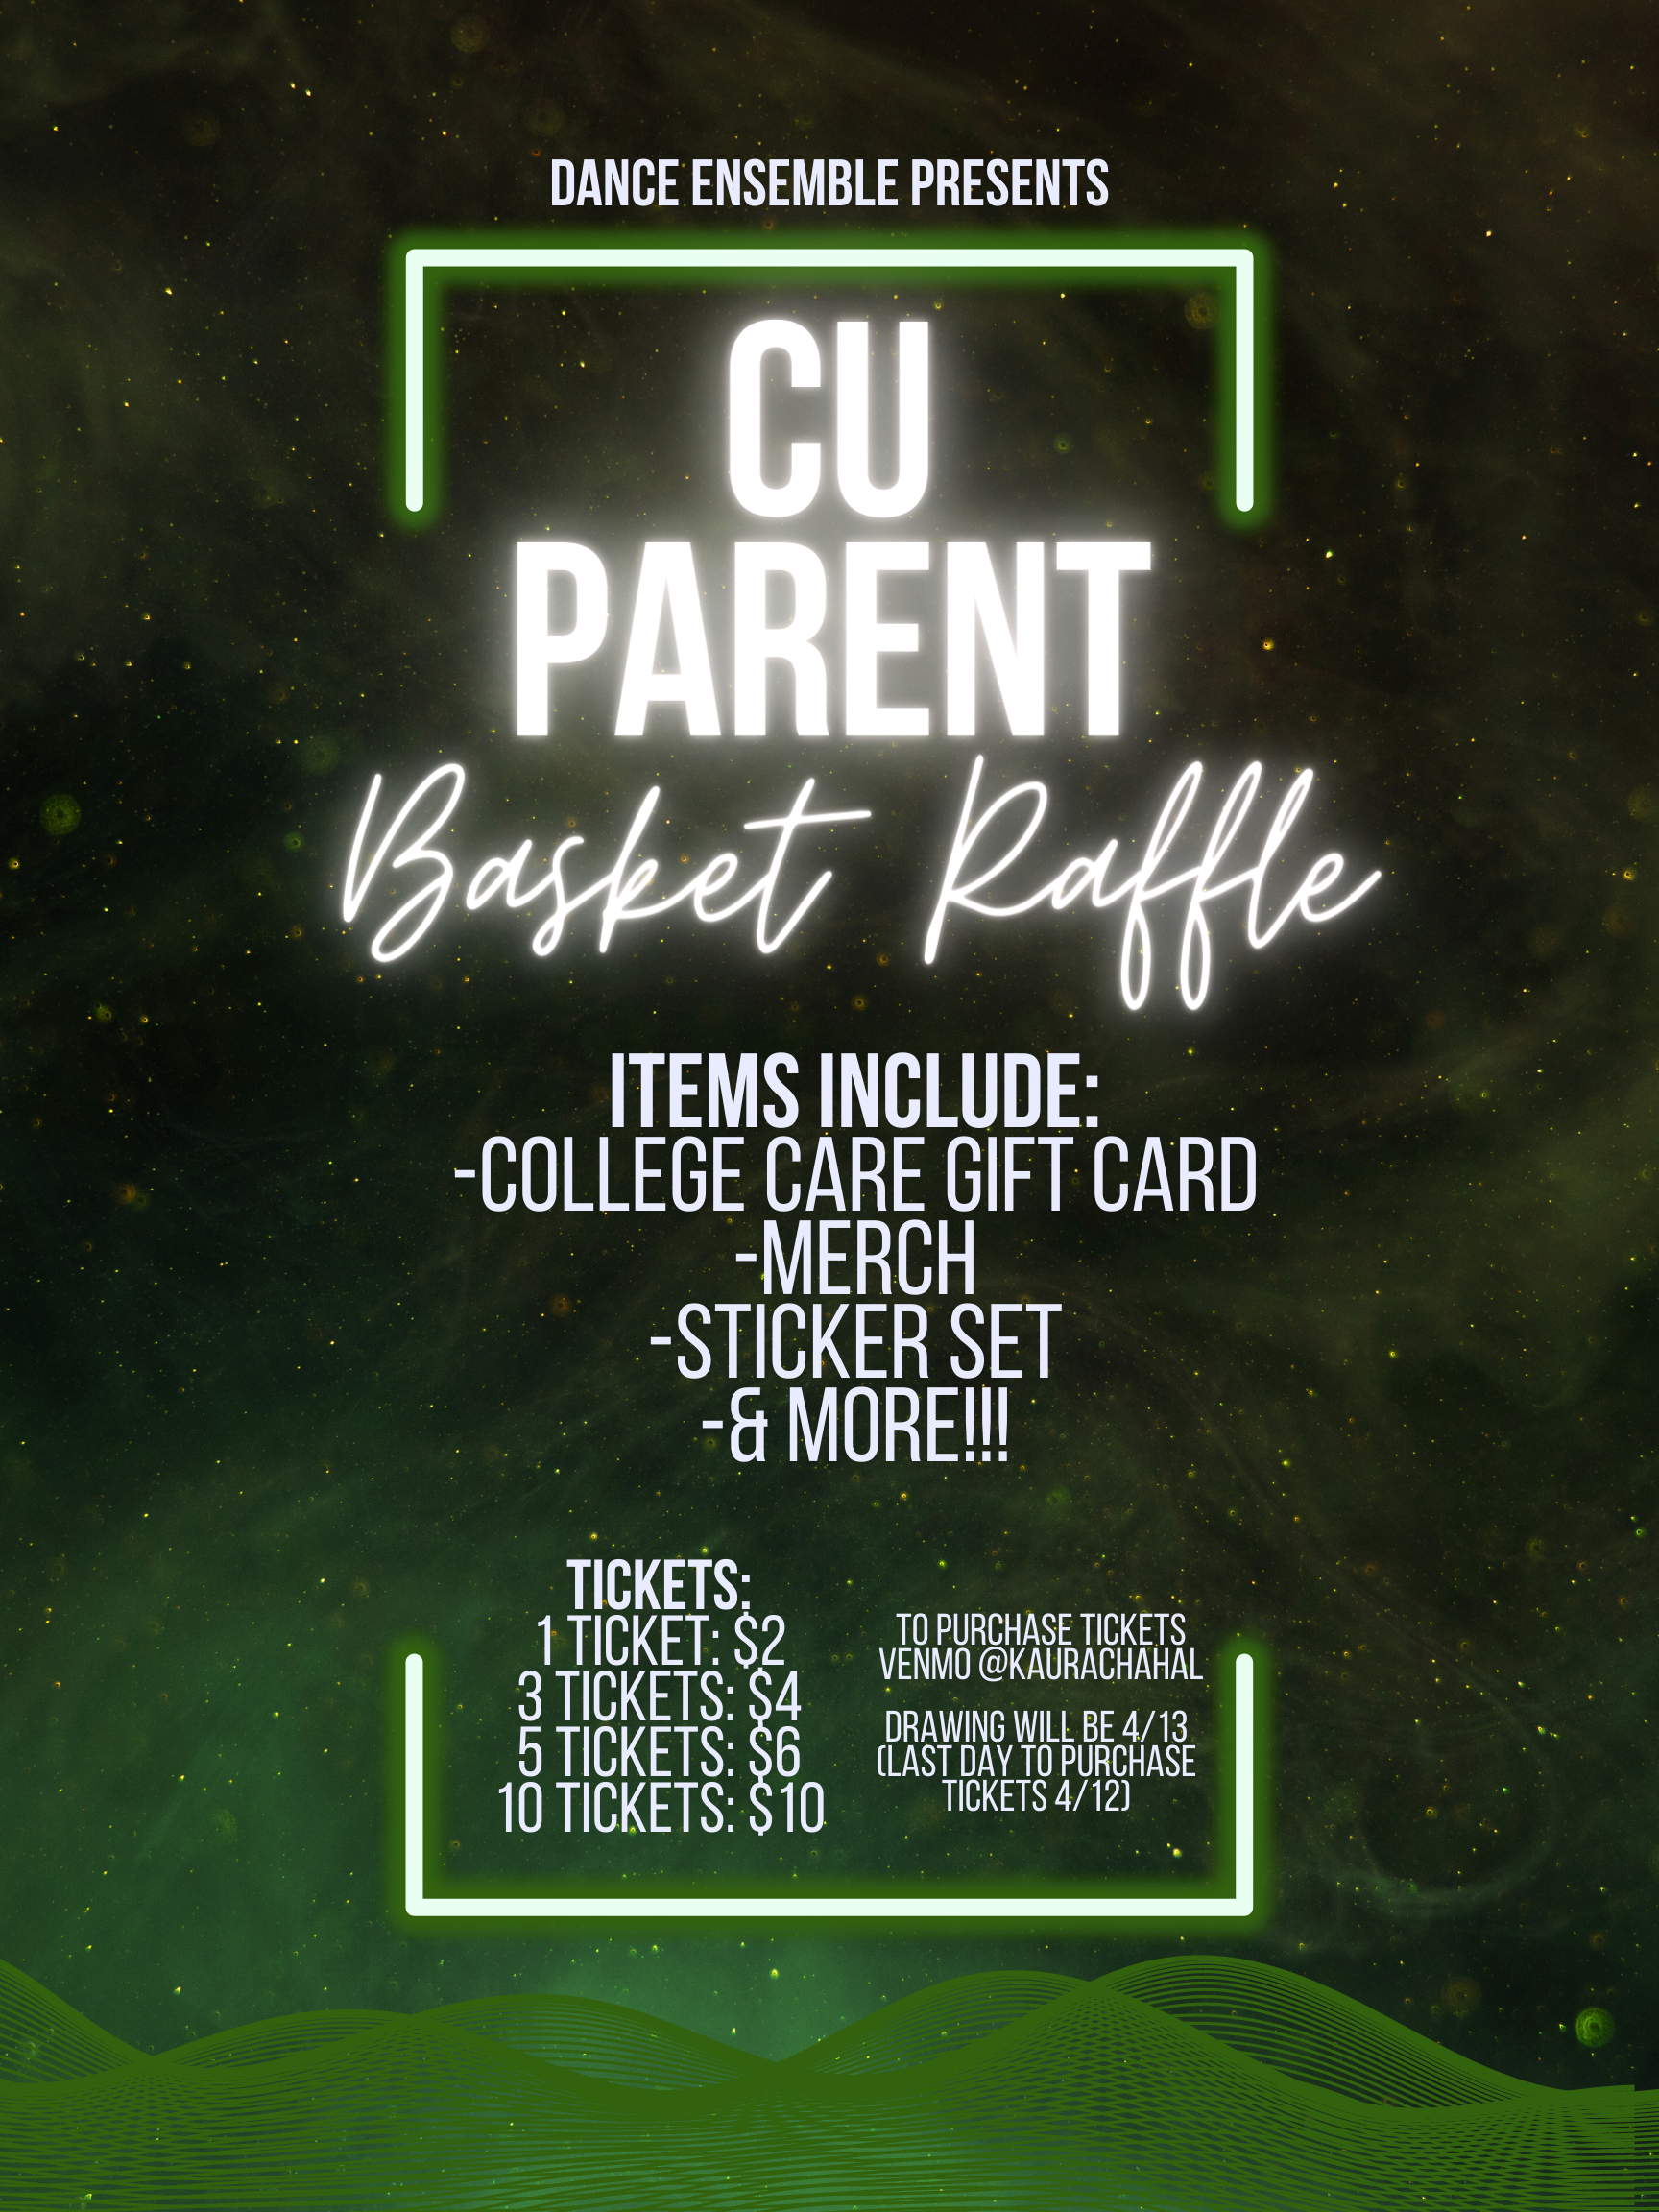 CU Parent Basket Raffle